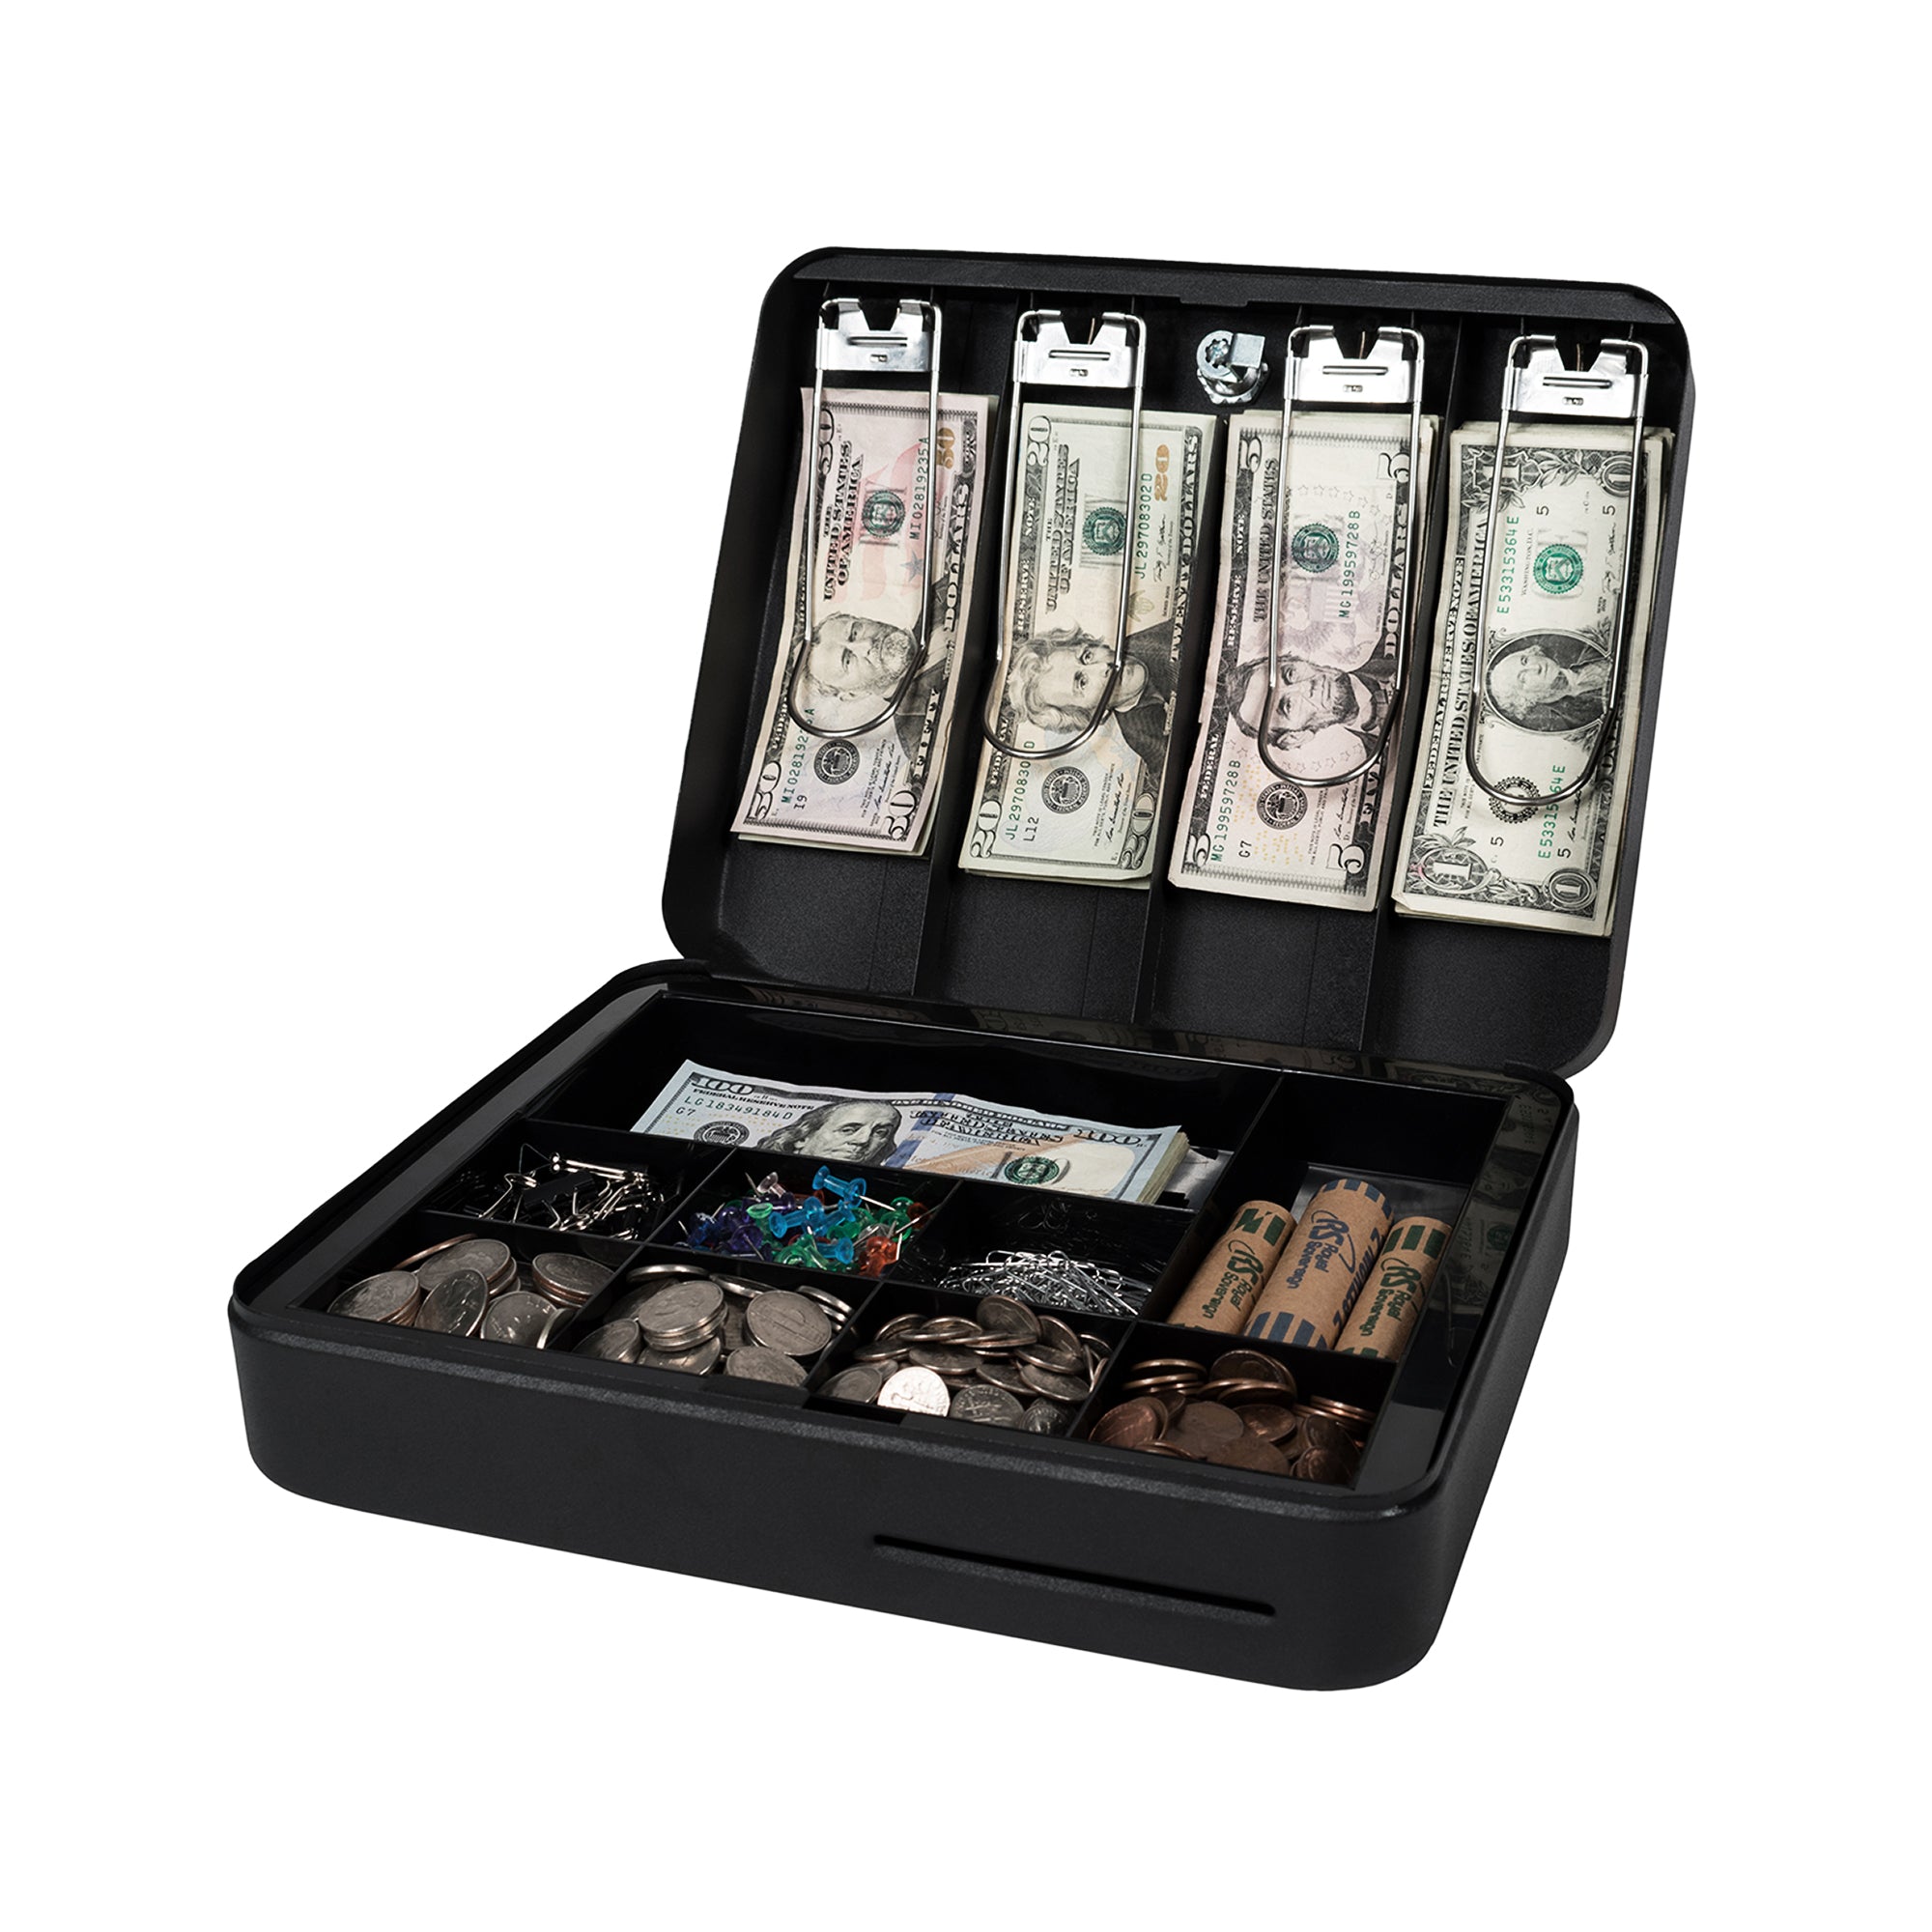 RSCB-300, Deluxe Cash Box, Safety Deposit Slot